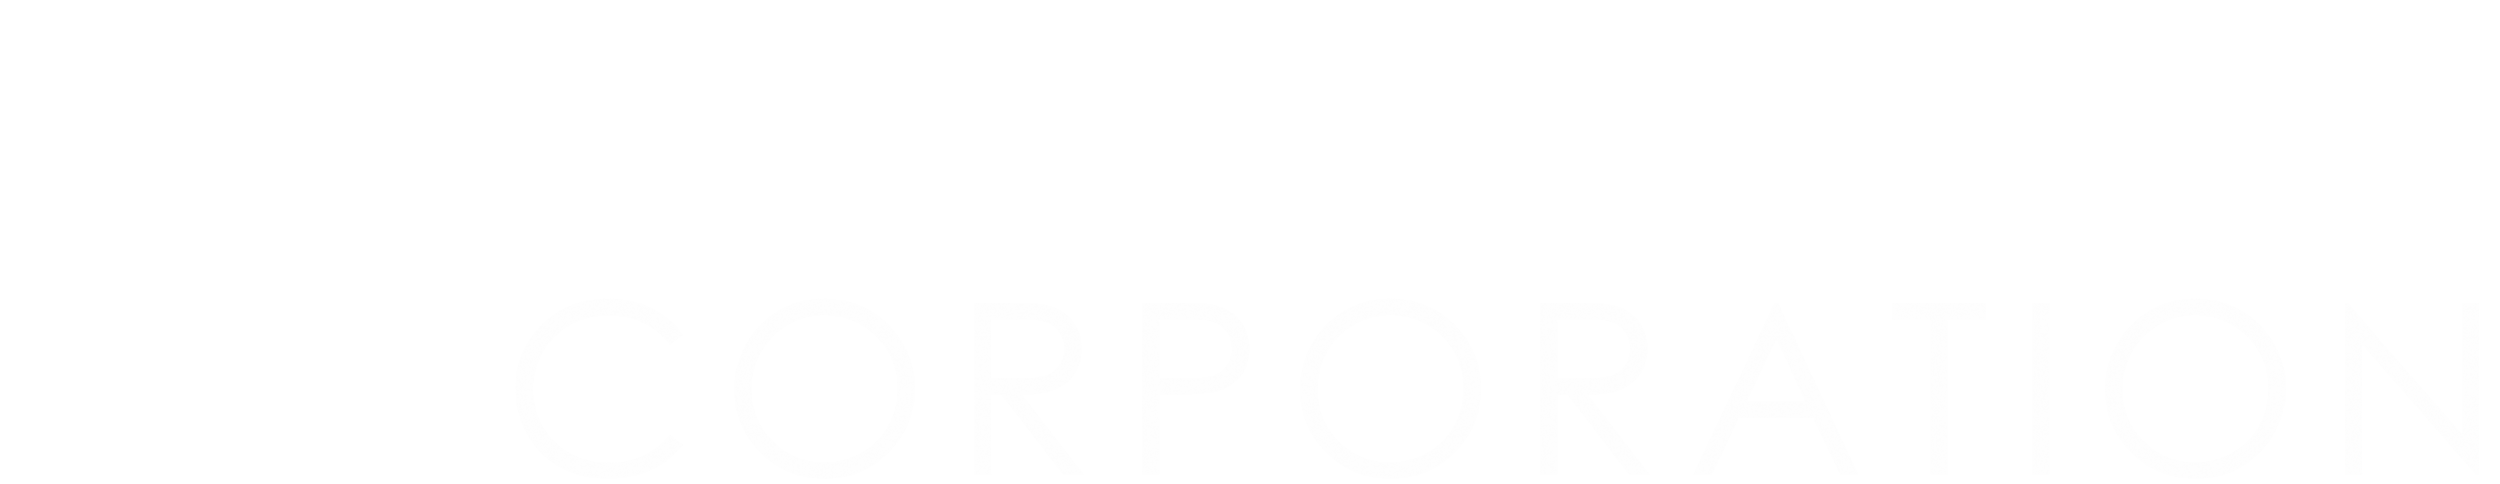 John Law Corporation